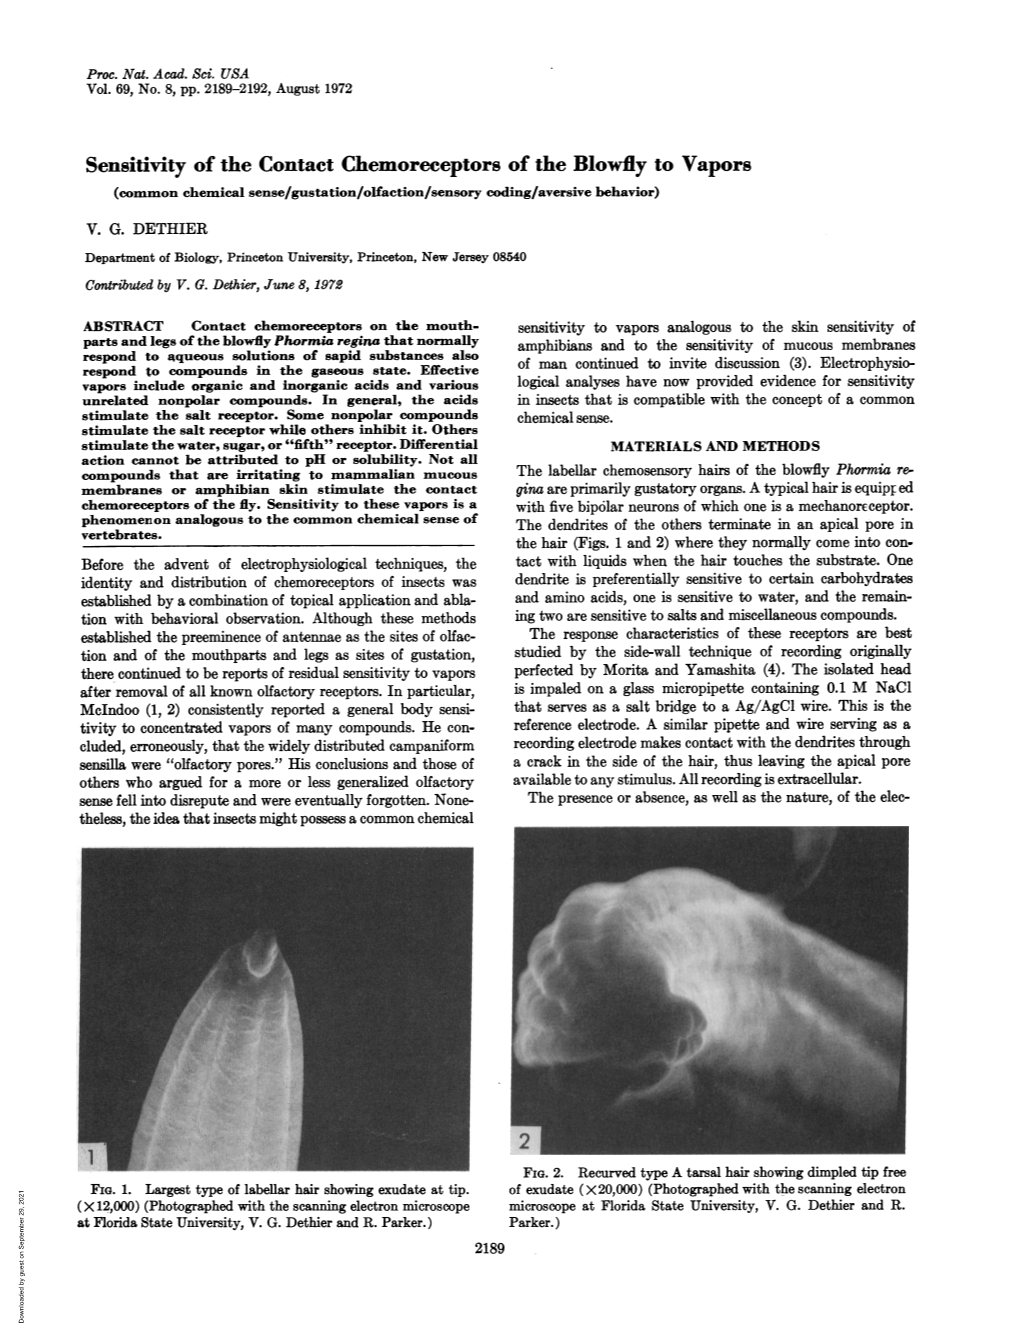 Sensitivity of the Contact Chemoreceptors of the Blowfly to Vapors (Common Chemical Sense/Gustation/Olfaction/Sensory Coding/Aversive Behavior)